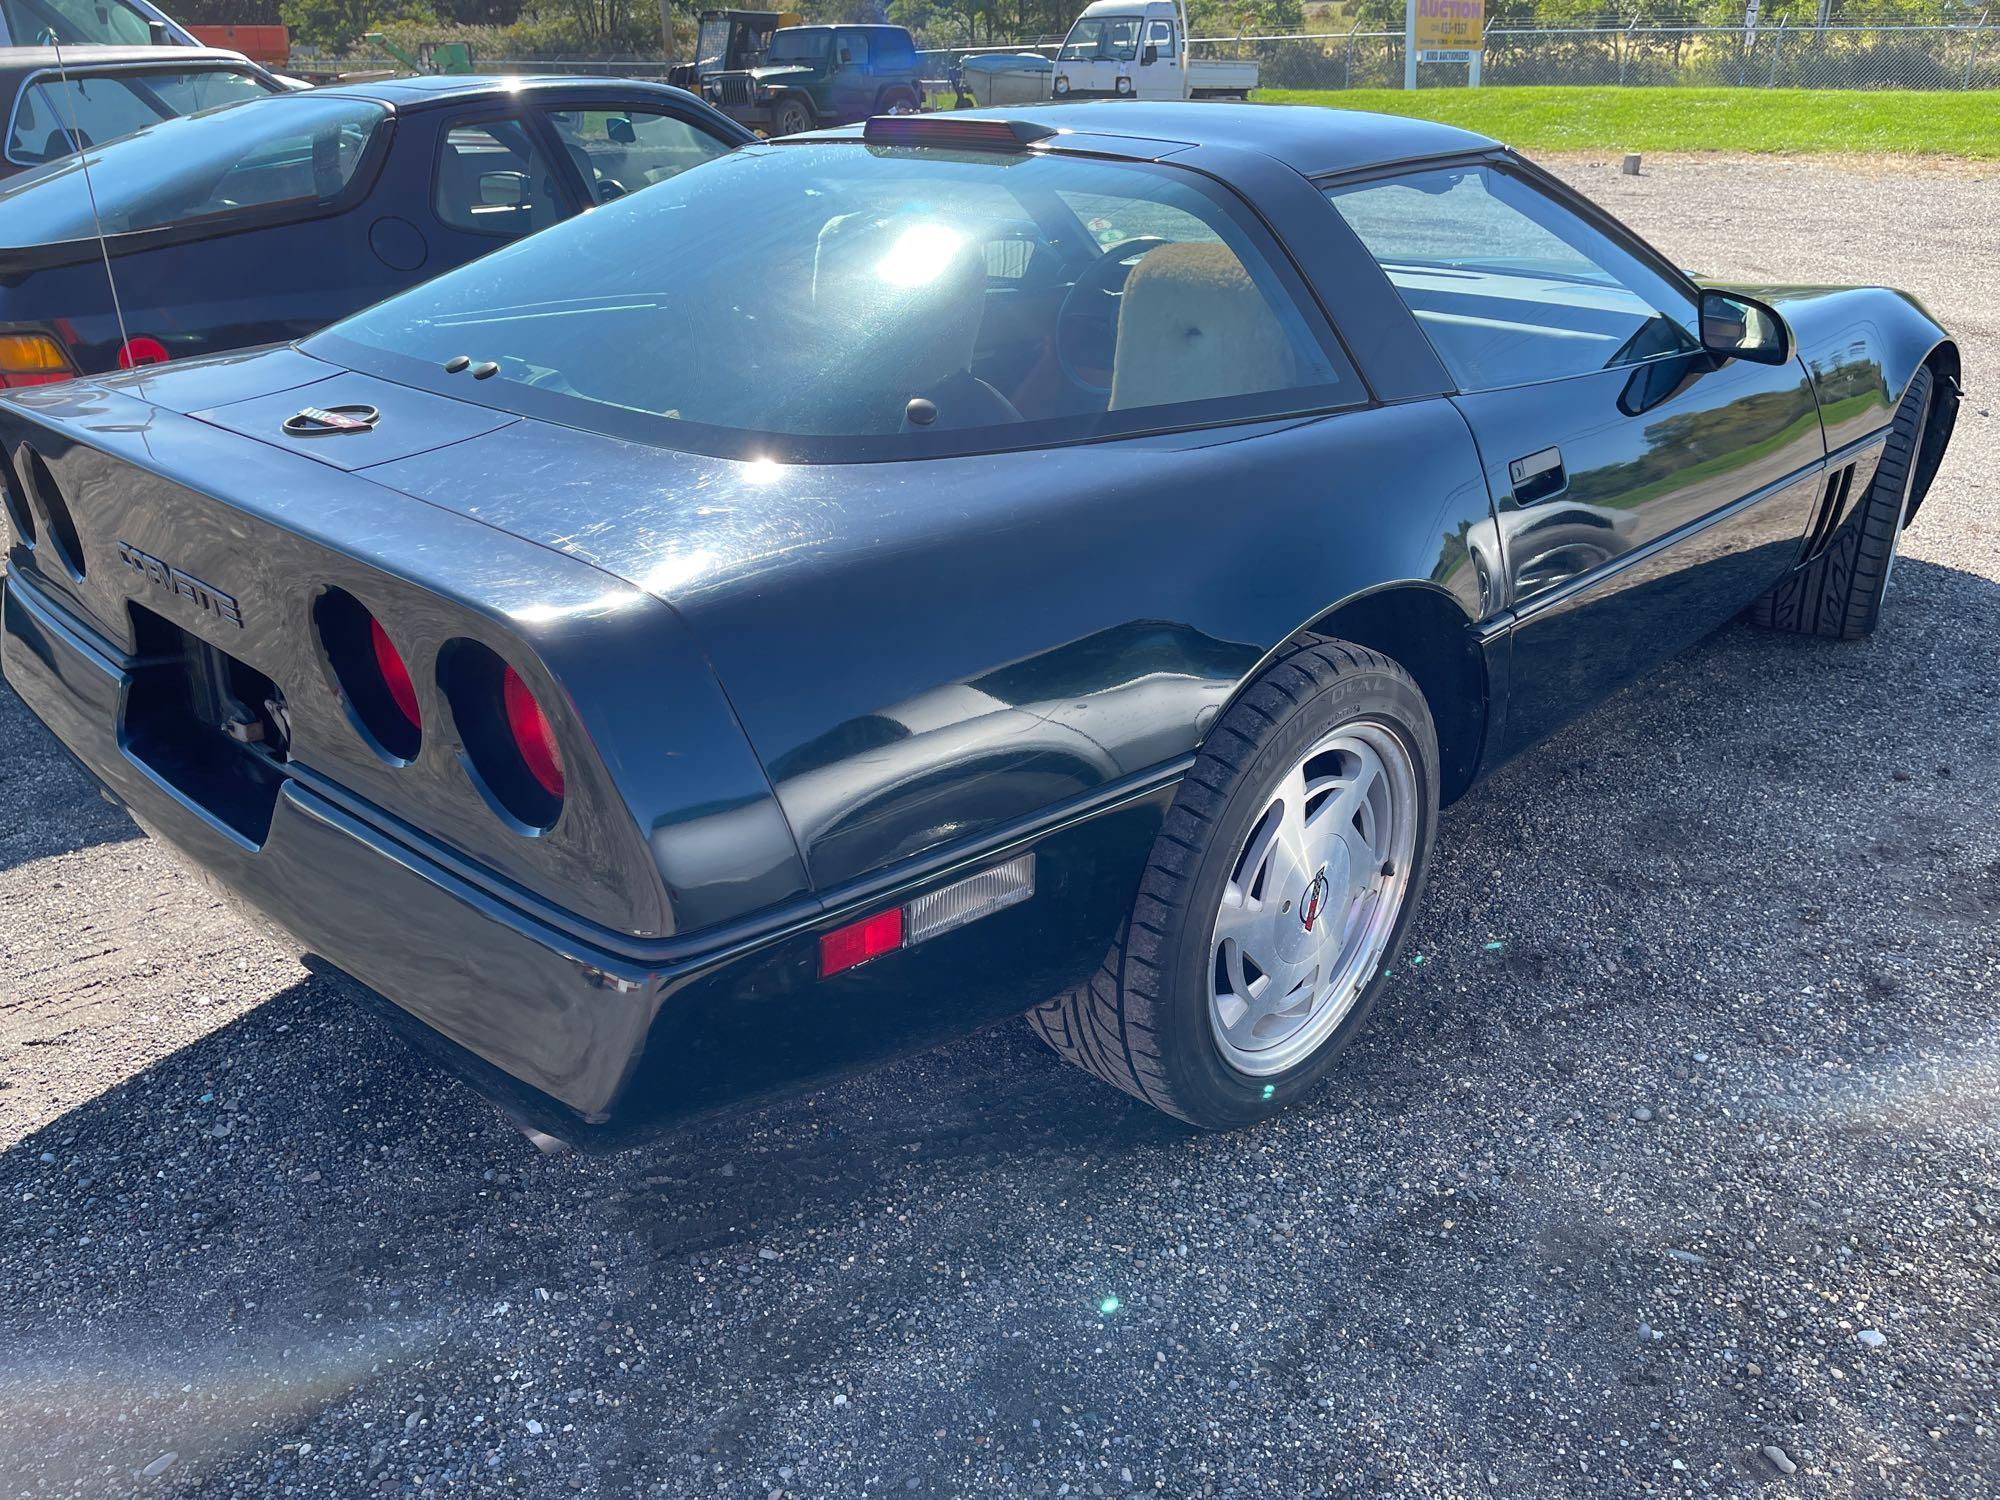 1989 black Corvette. 54,206 miles. Runs.